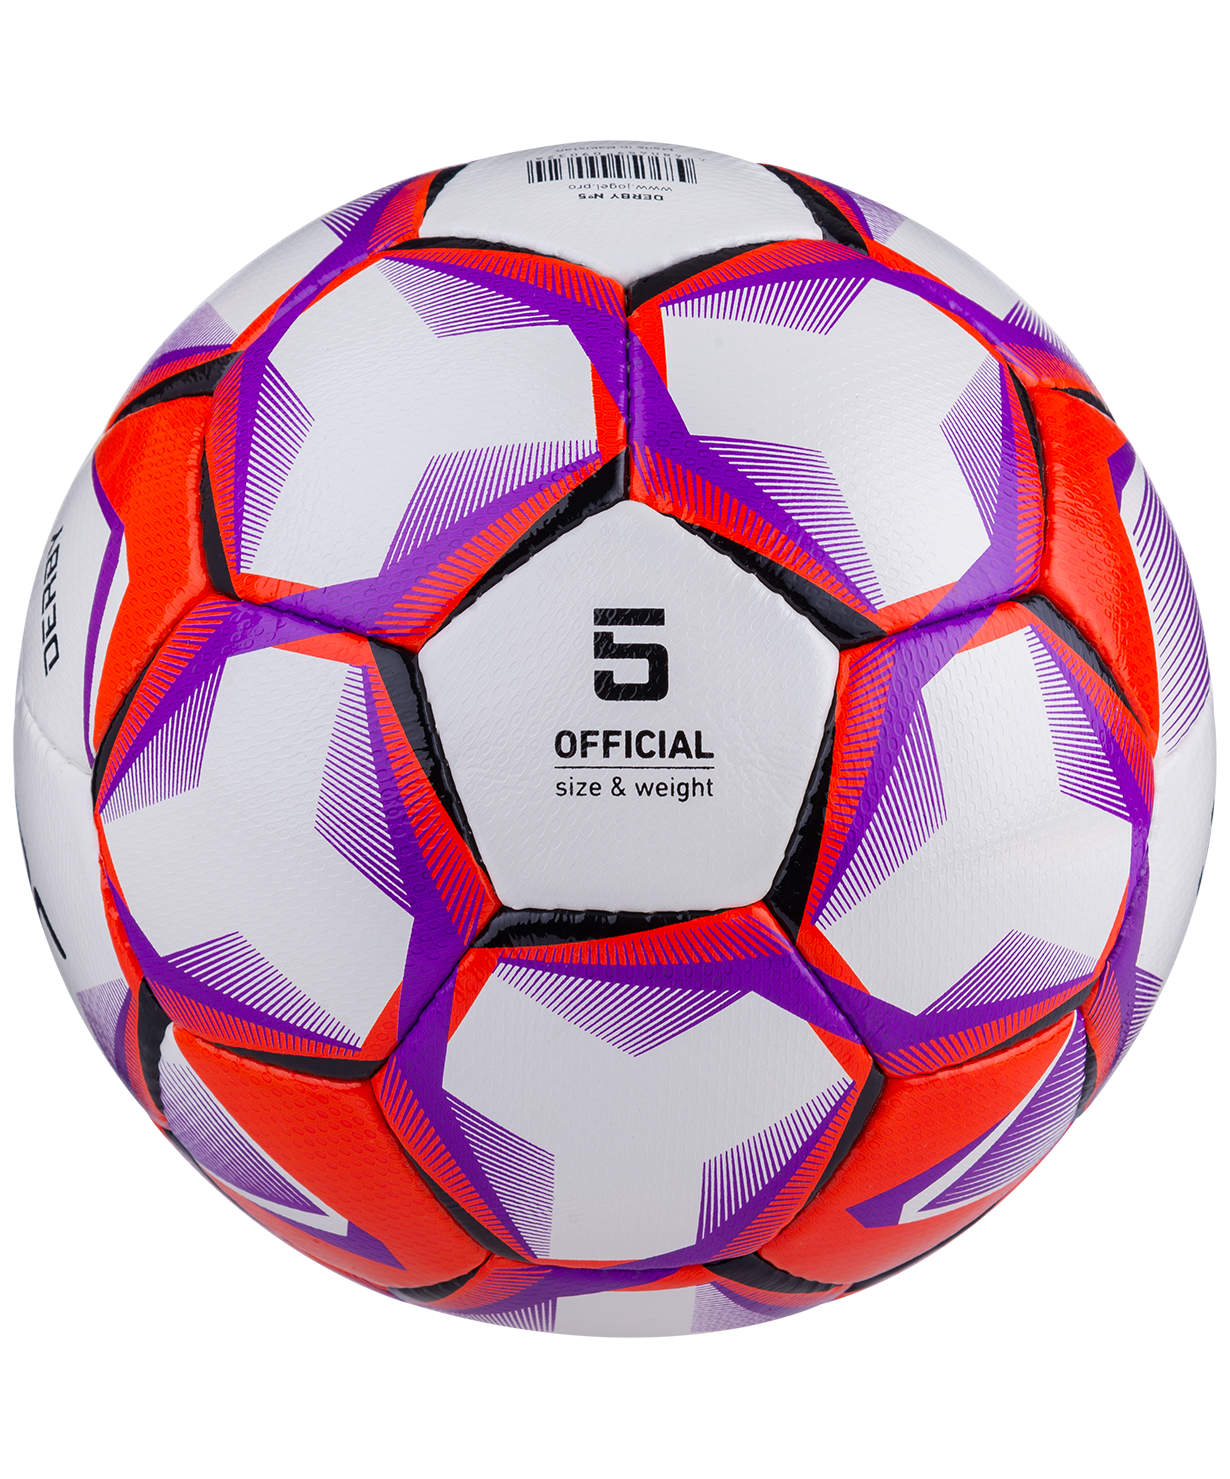 фото Jogel DERBY мяч футбольный размер 5 Football-54 